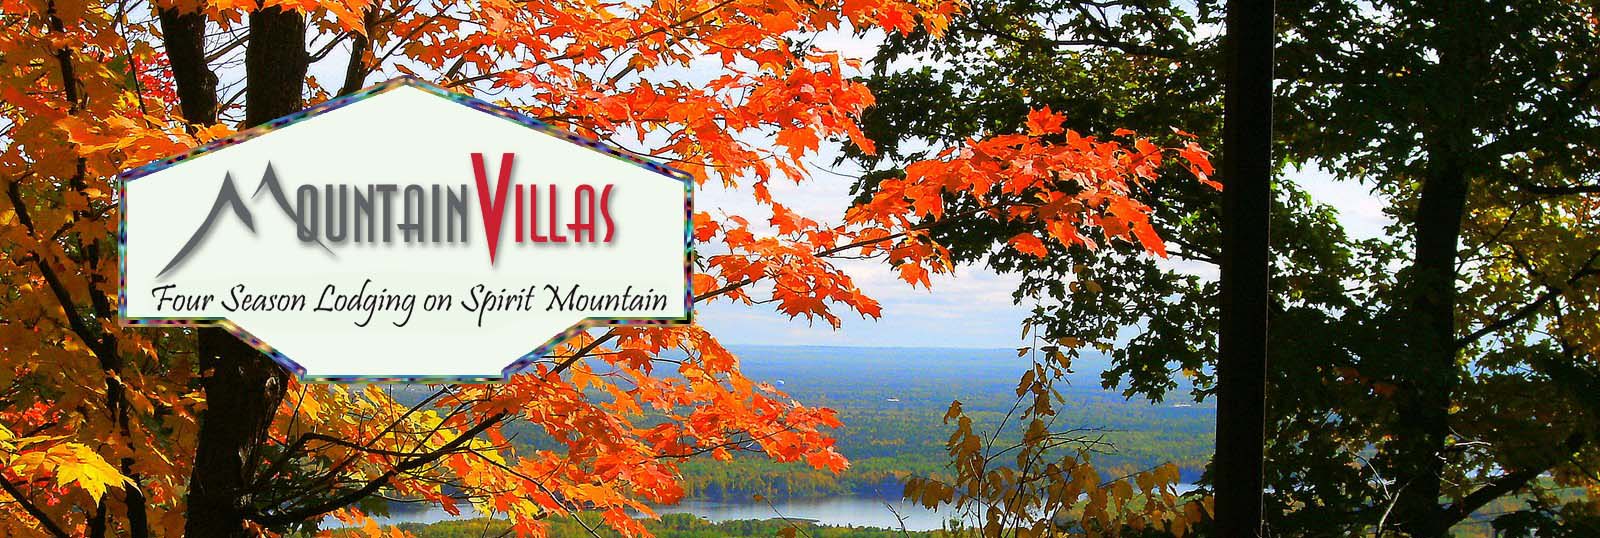 Mountain Villas Logo saying Four Season Lodging on Spirit Mountain, is superimposed on a view of Saint Louis Bay on a beautiful autumn day at Mountain Villas